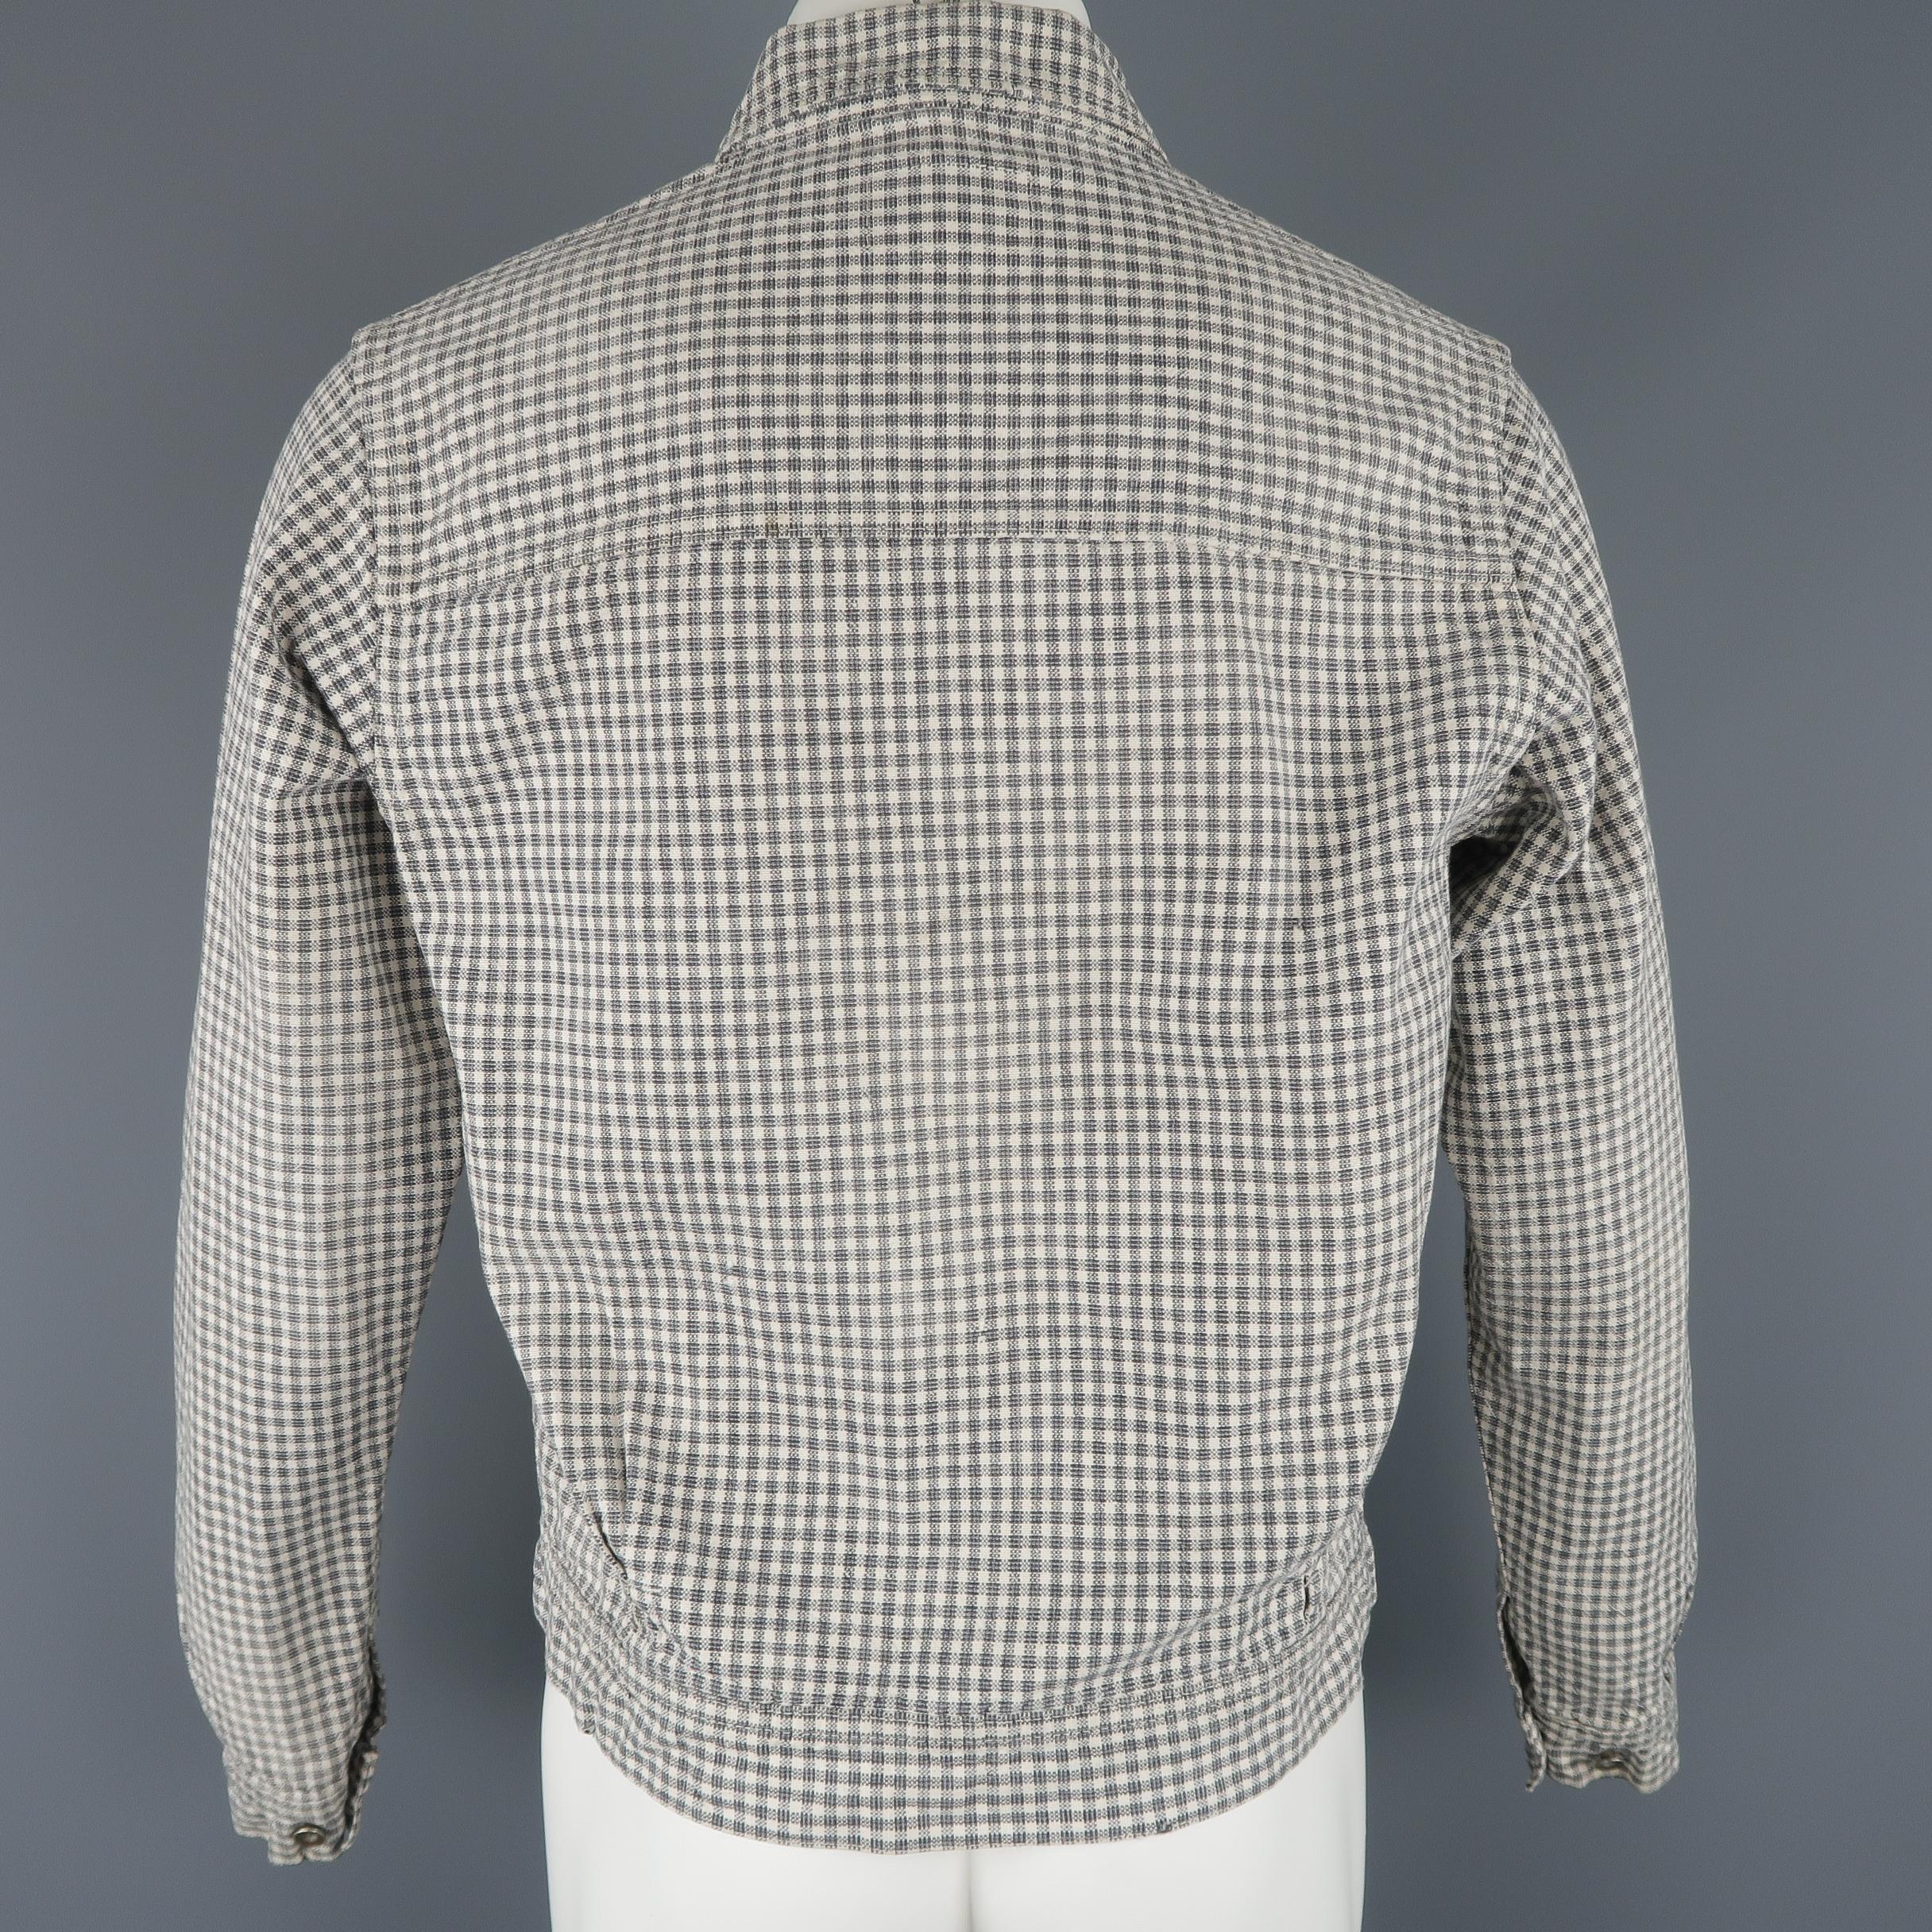 CHIMALA M Grey & White Checkered Distressed Cotton Trucker Jacket Coat 1